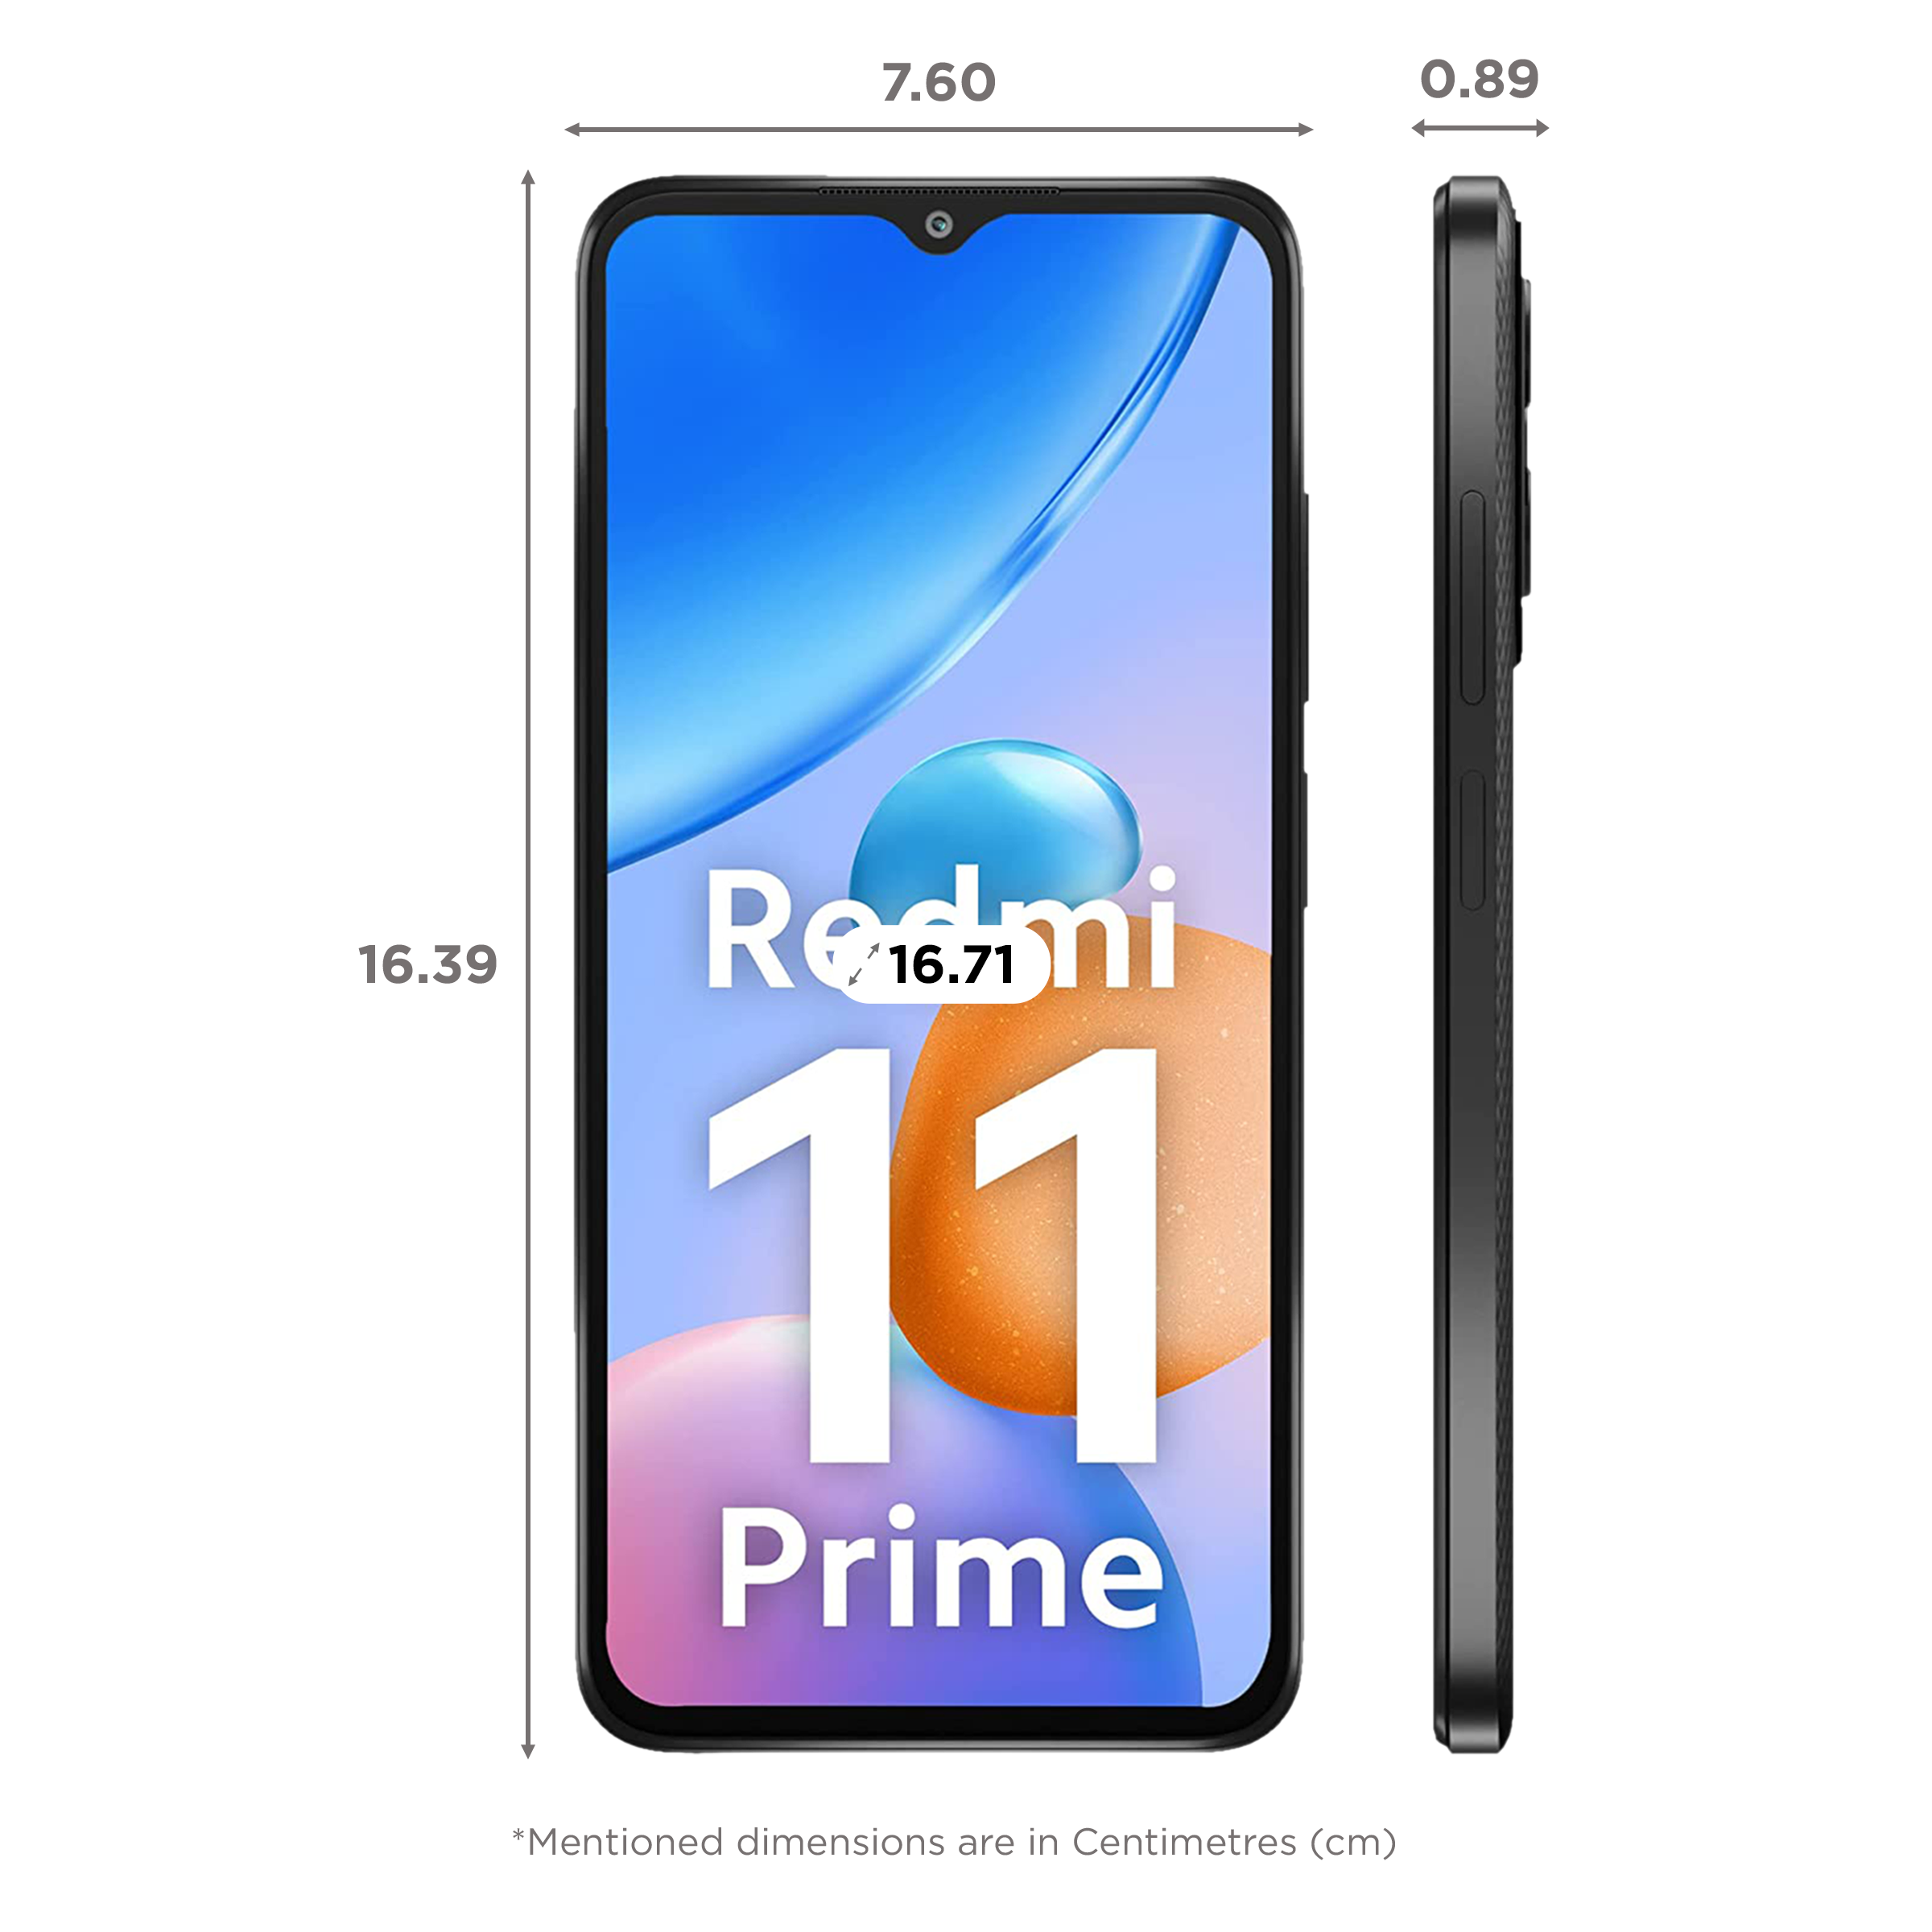 Buy Redmi 13C (6GB RAM, 128GB, Starfrost White) Online - Croma